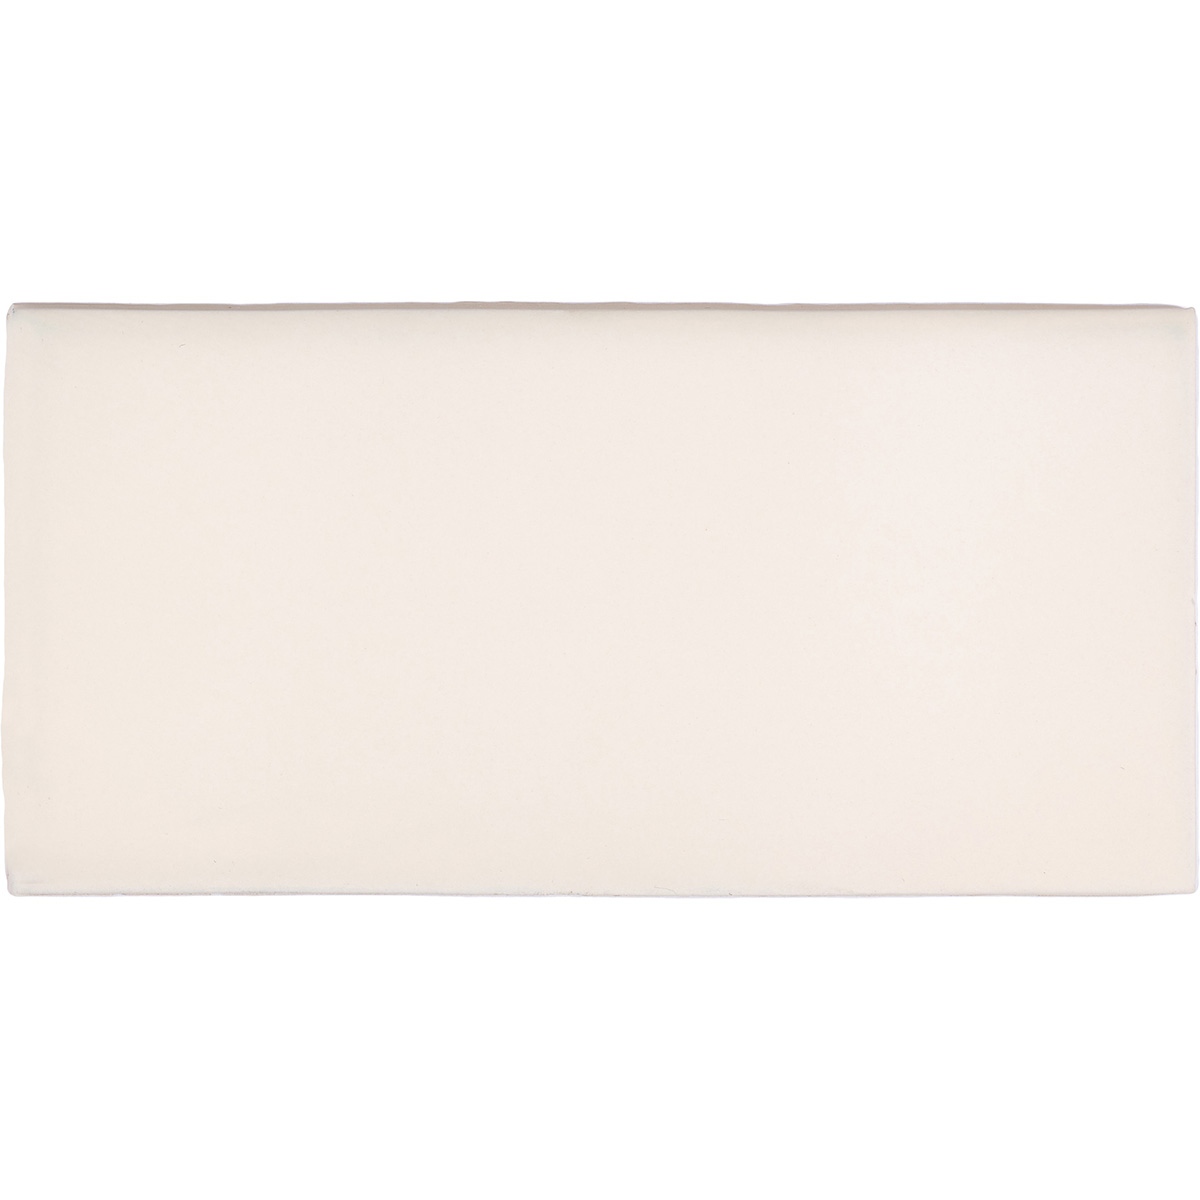 Parchment White Medium Brick, product variant image